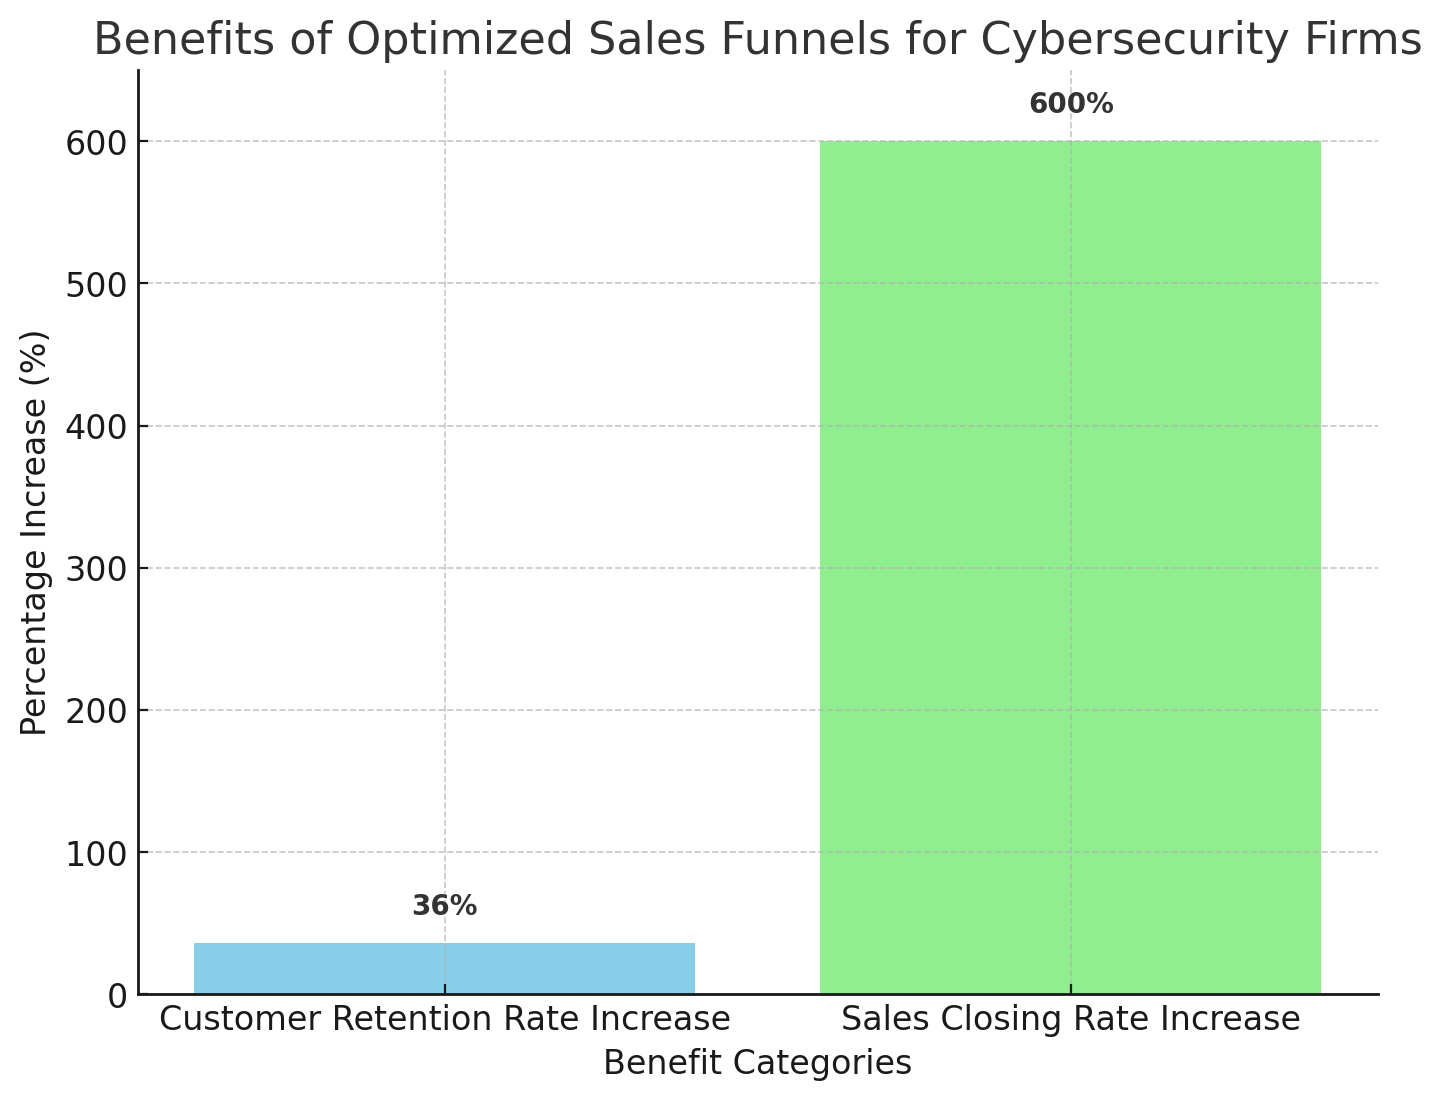 Data Visualization - Sales Closing Rate